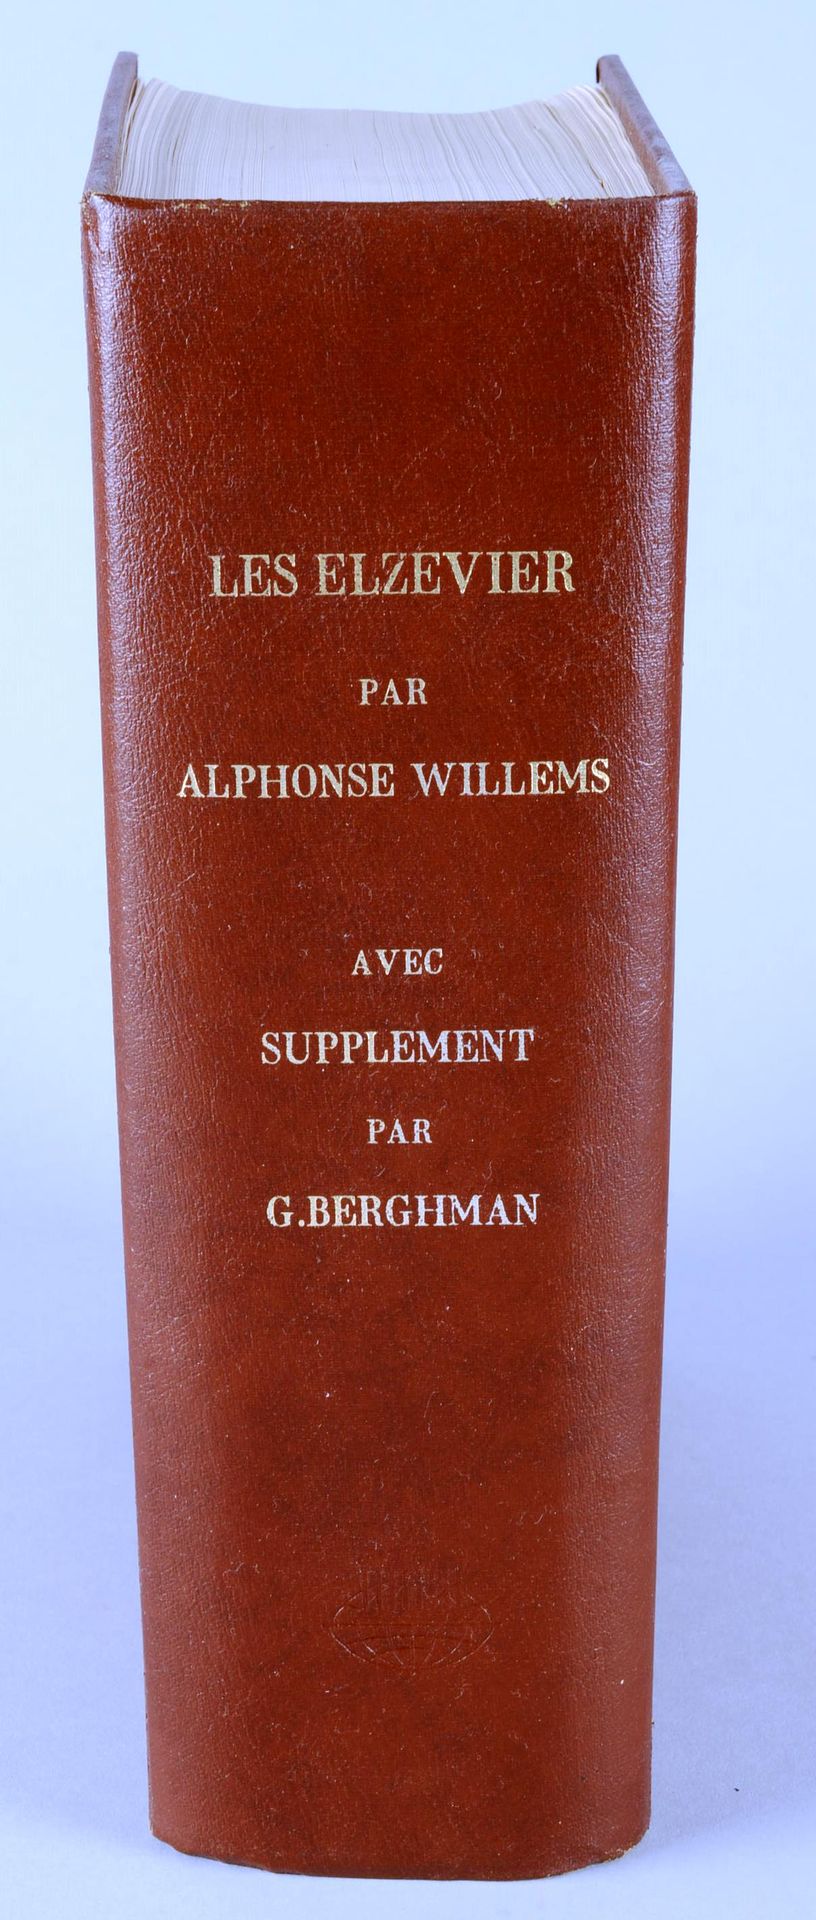 WILLEMS Alphonse WILLEMS Alphonse



Les Elzevier - 历史和排版年表



巴黎/布鲁塞尔，Labitte/V&hellip;